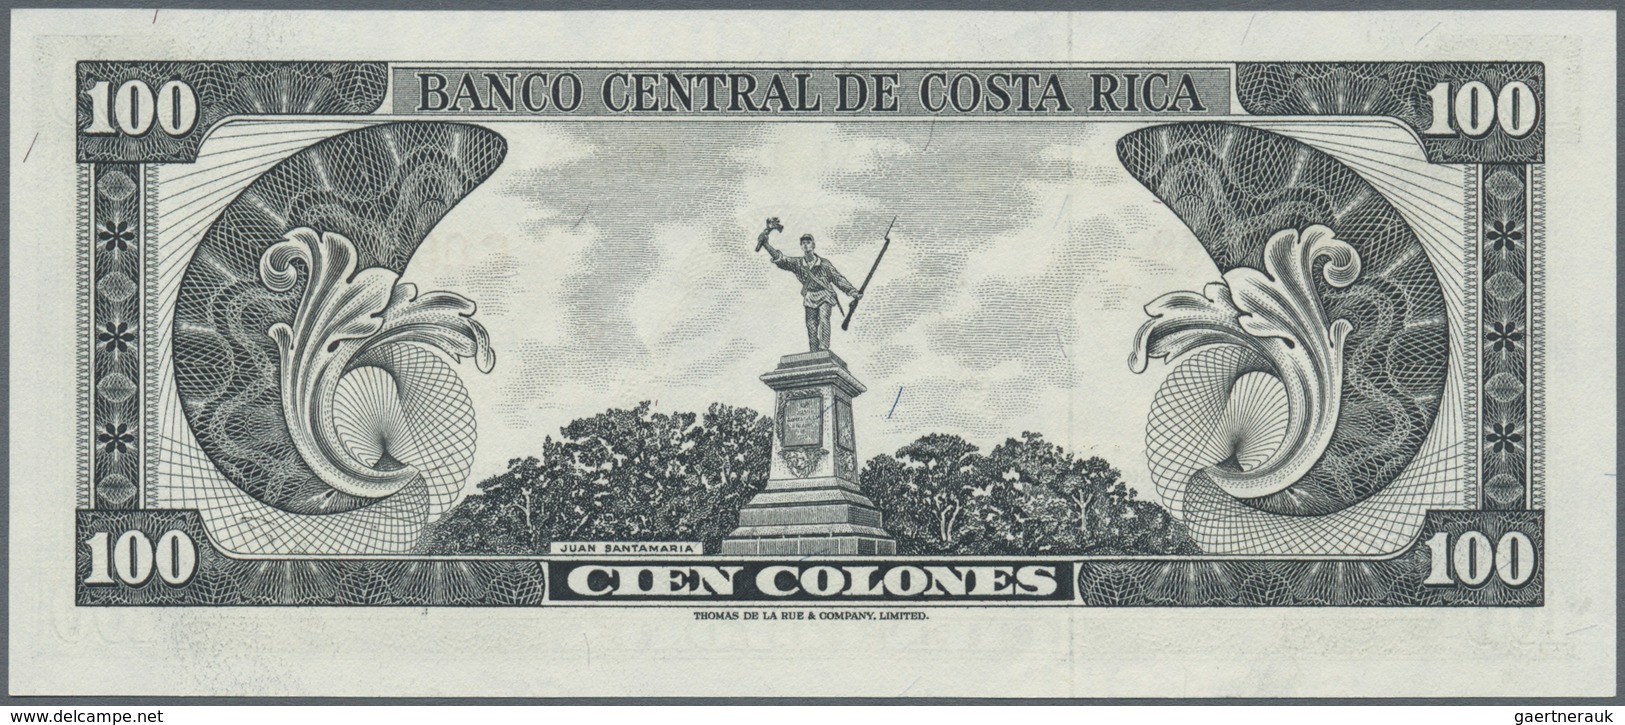 Costa Rica: 100 Colones 1967 P. 234, S/N C0670638, Crisp Original Paper, Unfolded, Light Dints At Up - Costa Rica